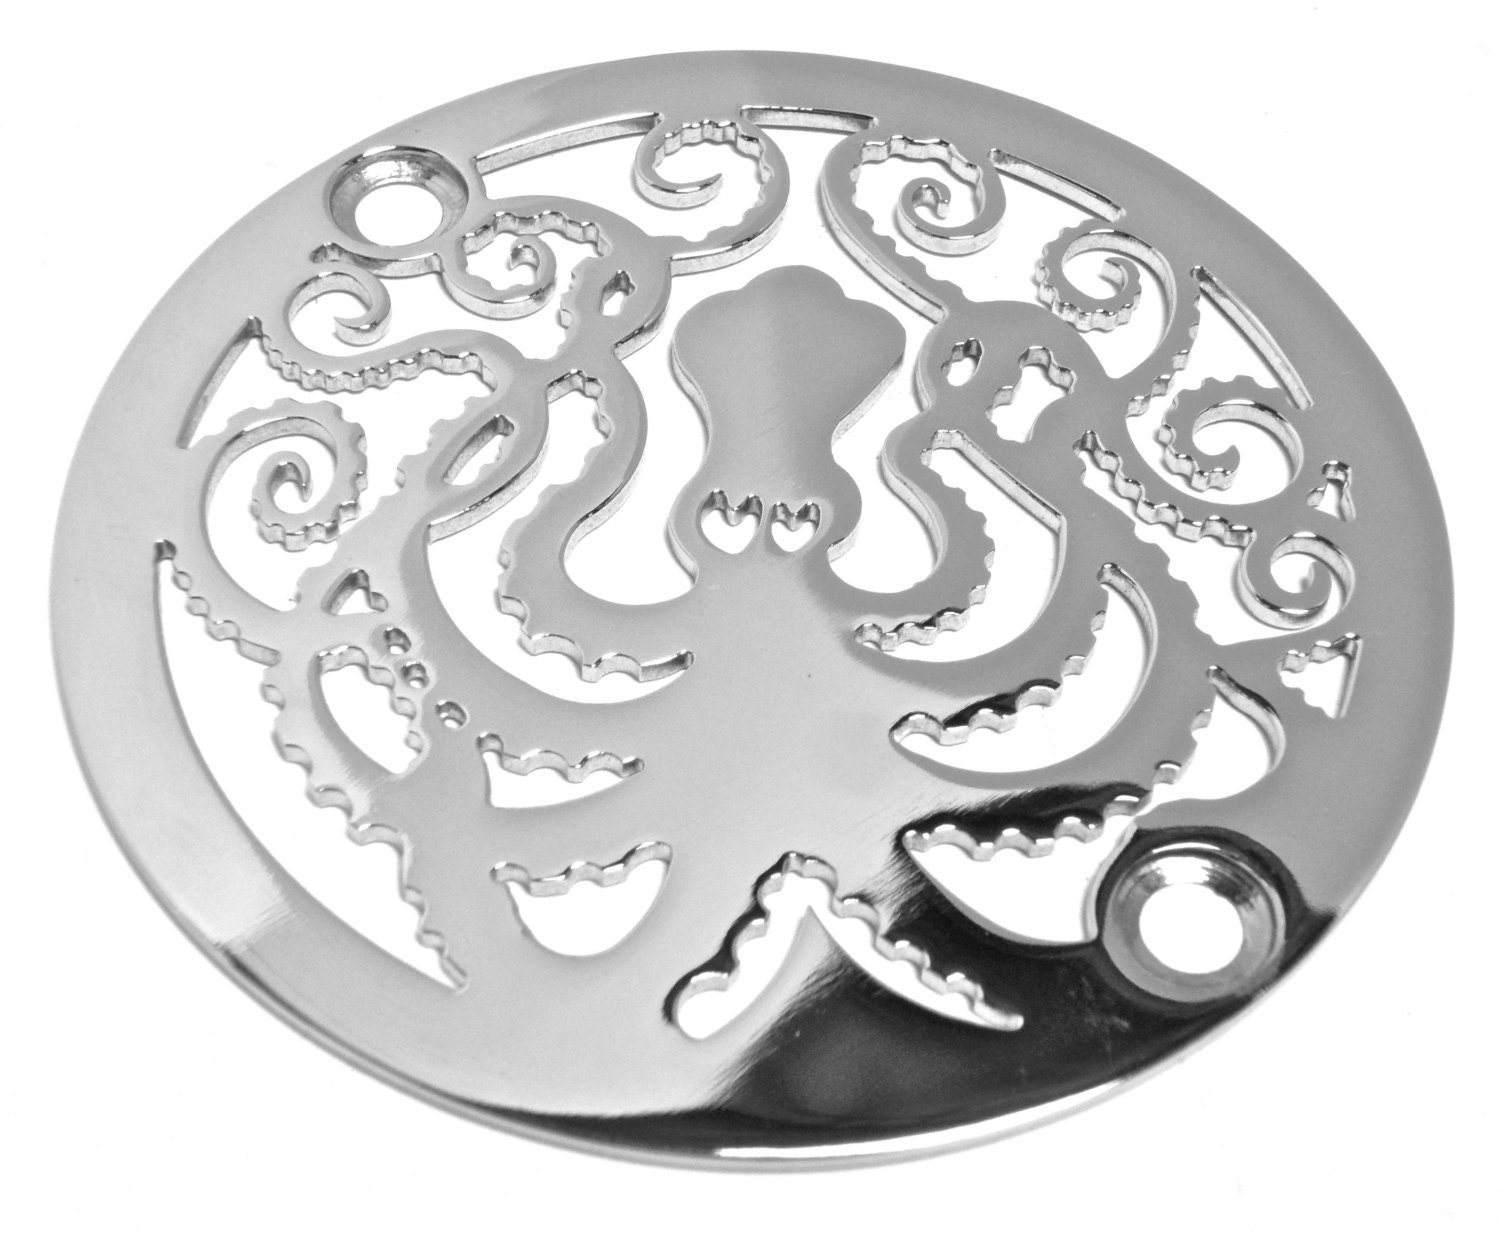 Shower Drain, 3.25 Diameter, Octopus Design by Designer Drains 